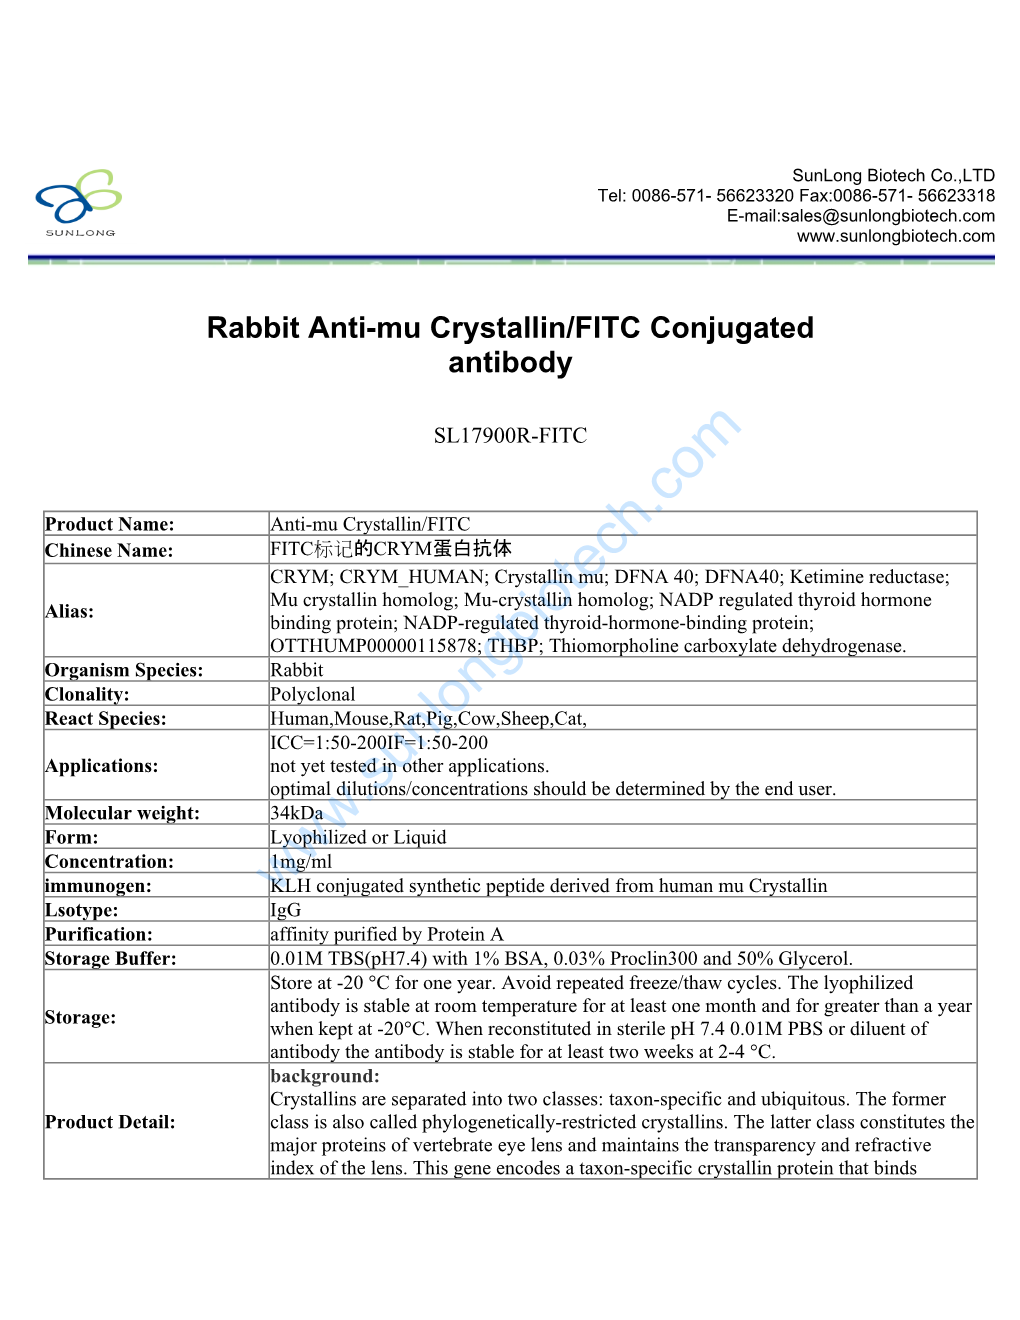 Rabbit Anti-Mu Crystallin/FITC Conjugated Antibody-SL17900R-FITC